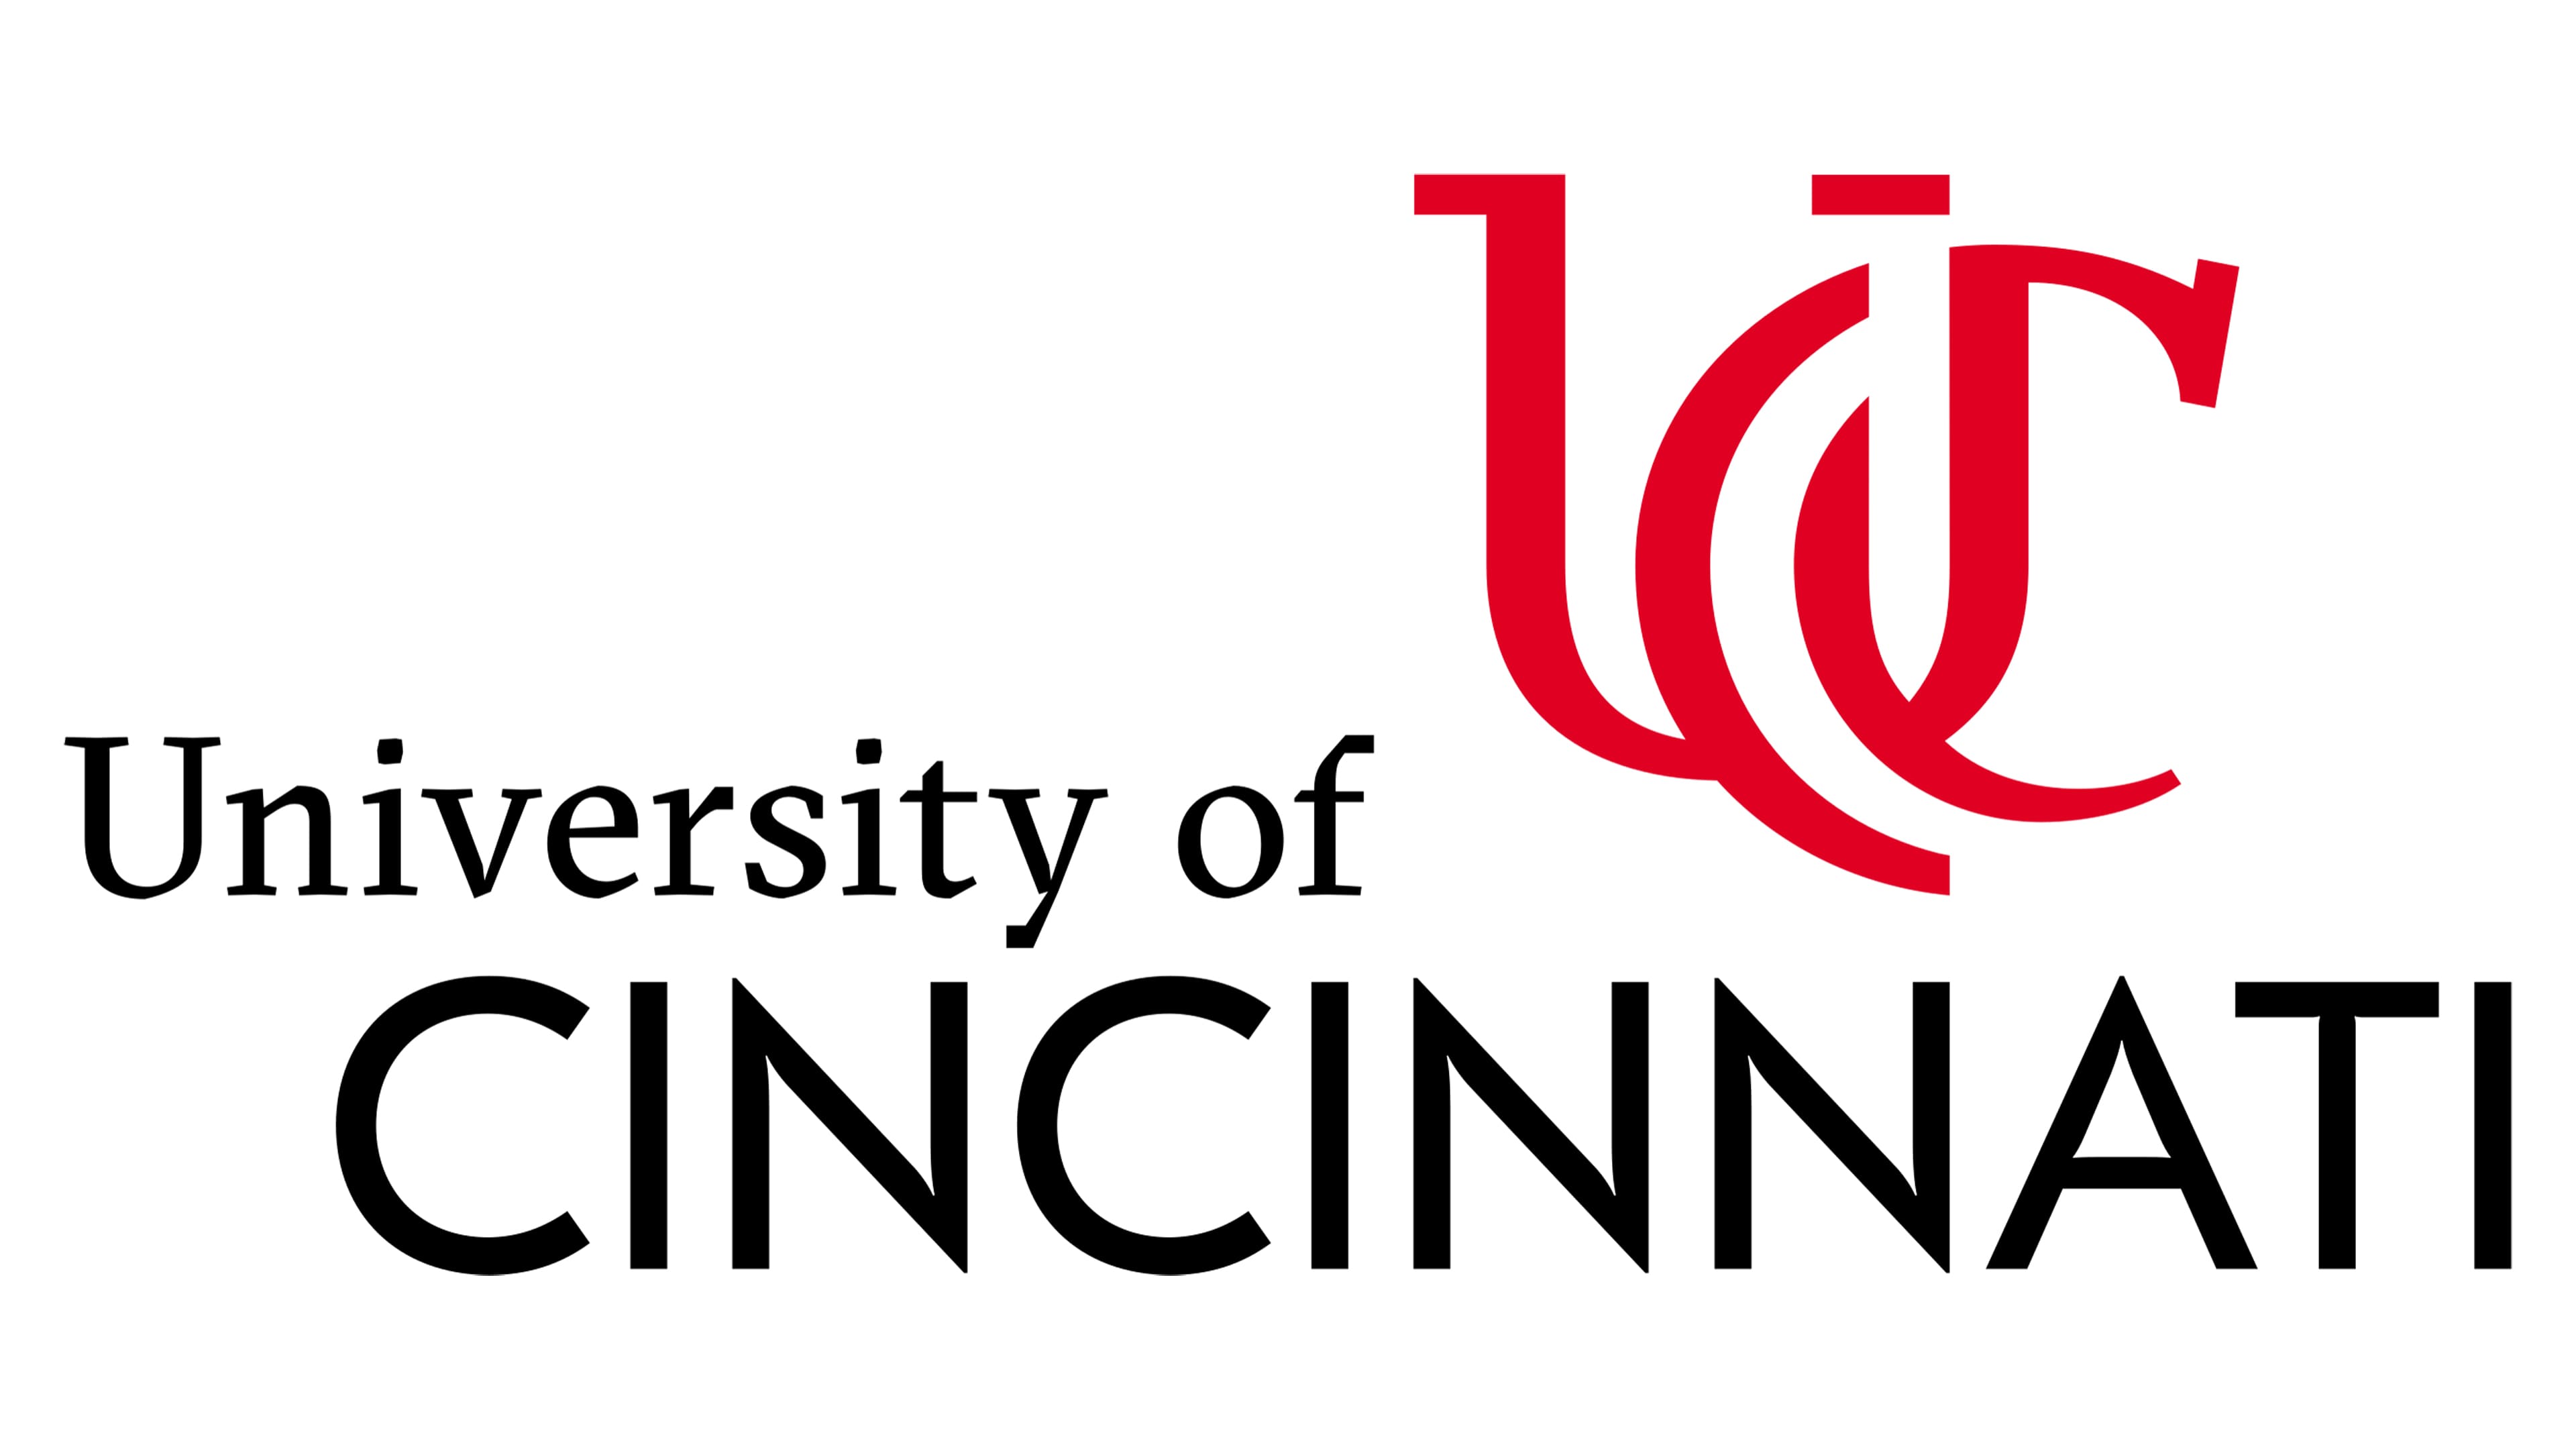 University of Cincinnati, United states of America